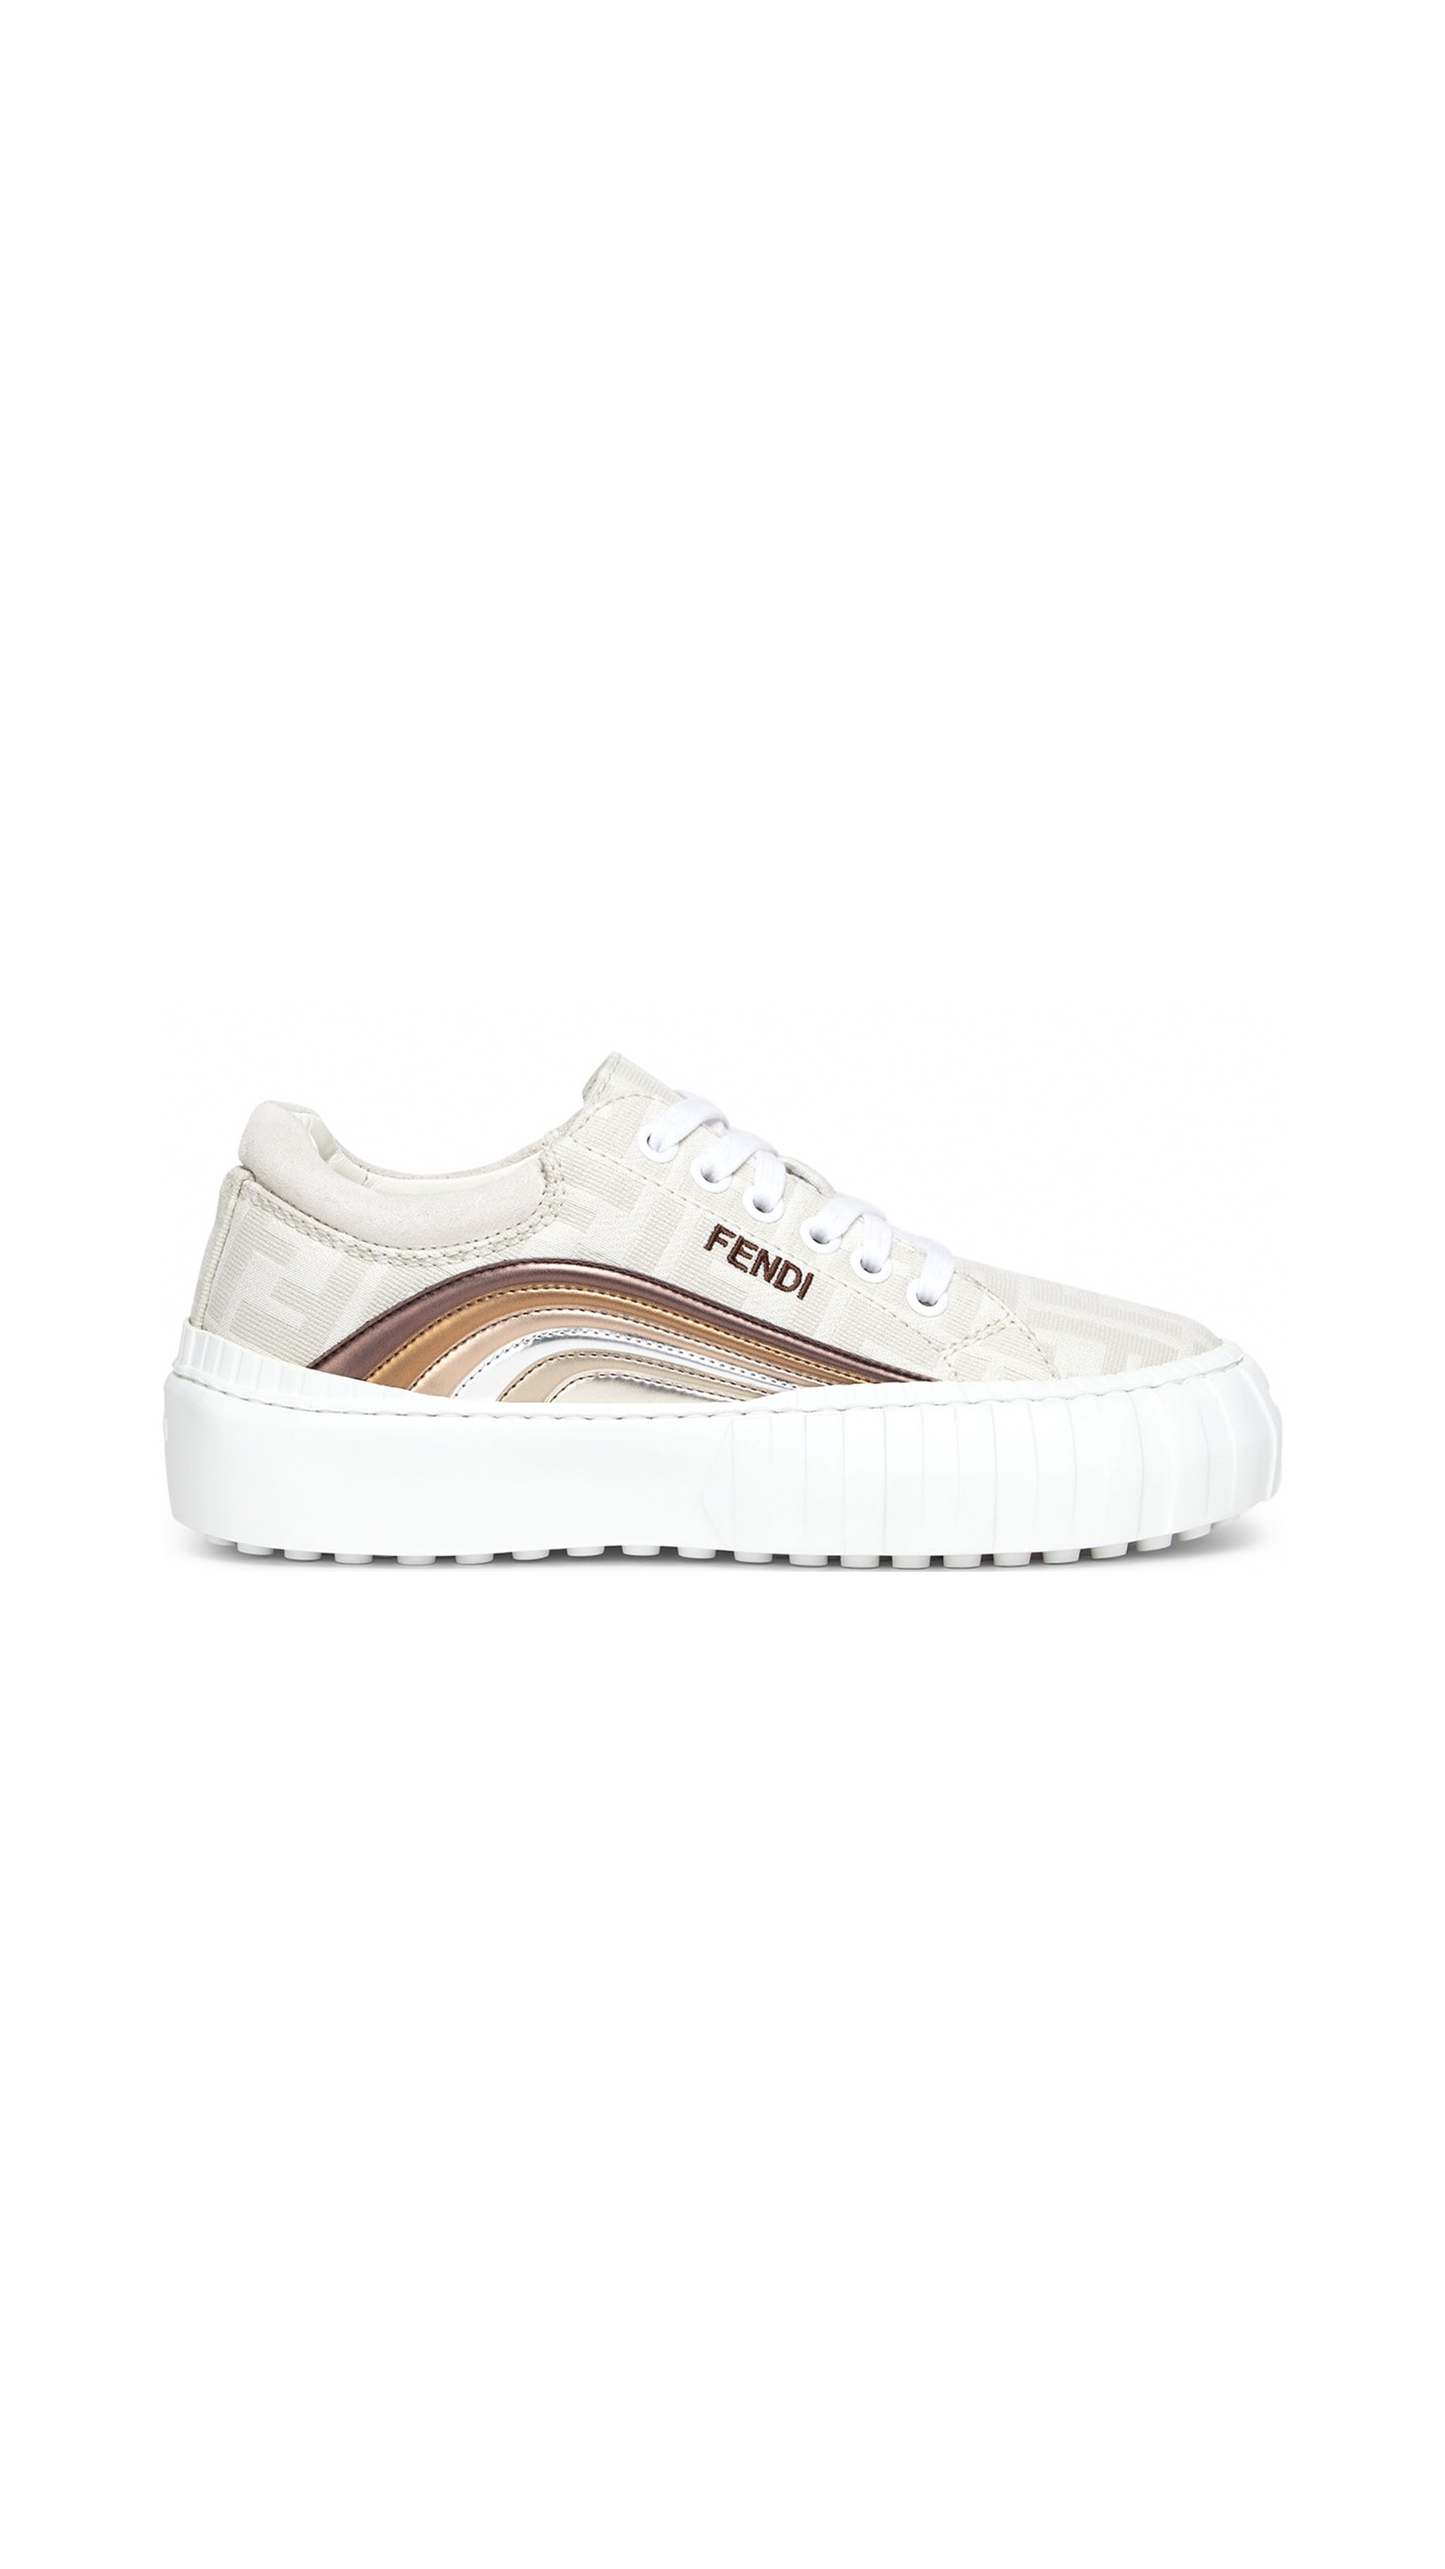 Fendi Force Sneakers - White / Multi